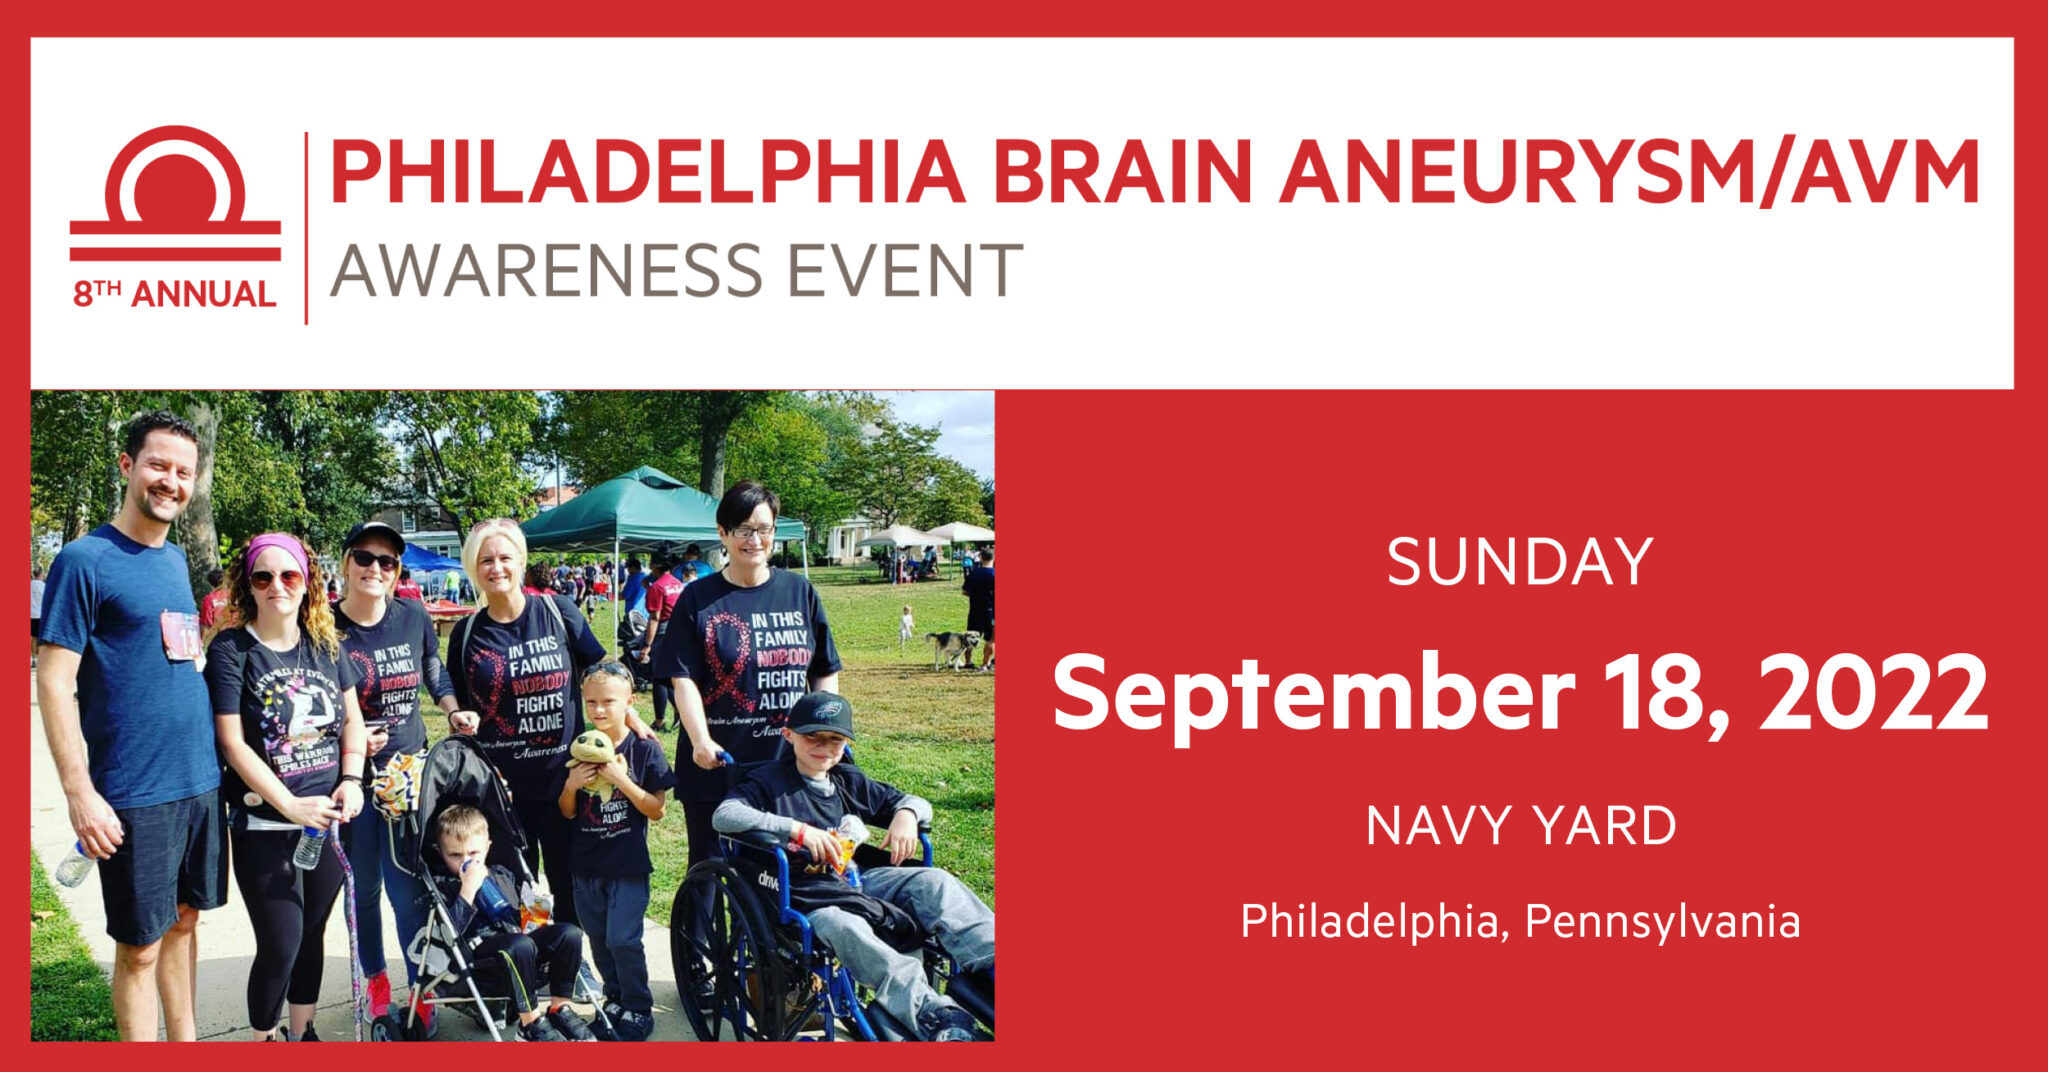 Philadelphia Brain Aneurysm Awareness/AVM Event Brain Aneurysm Foundation